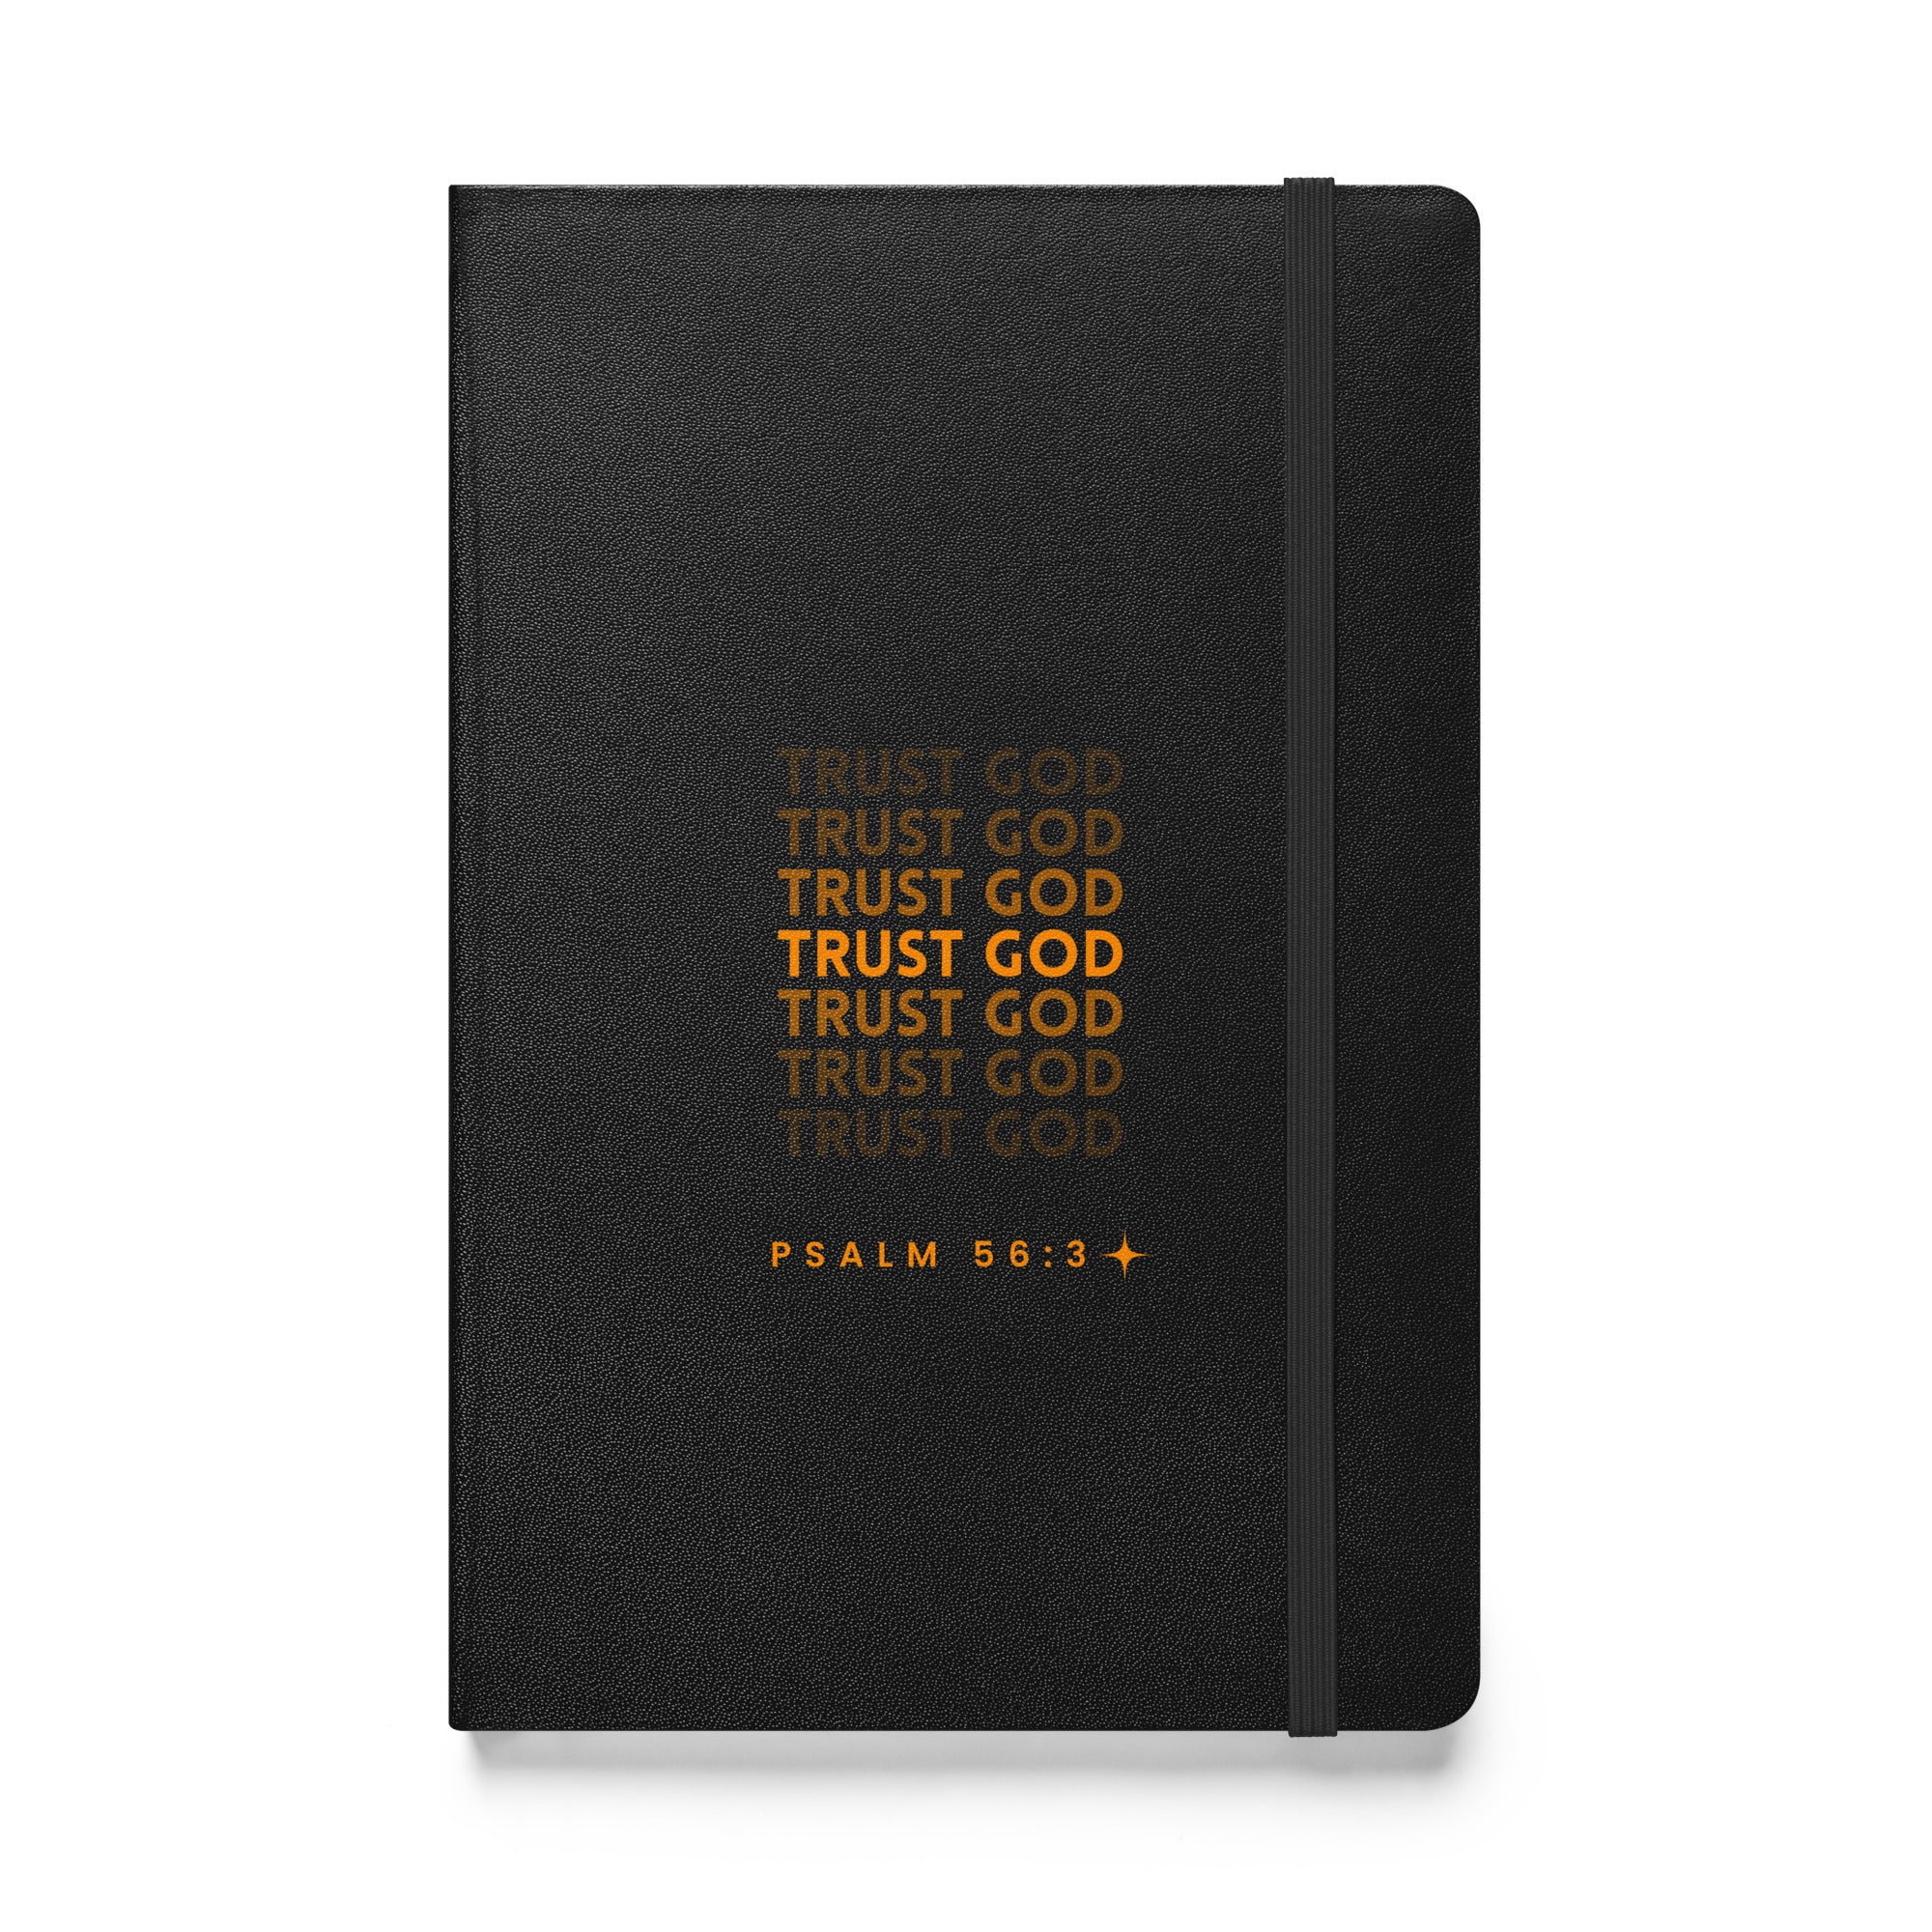 Hardcover bound notebook - Psalm 56:3